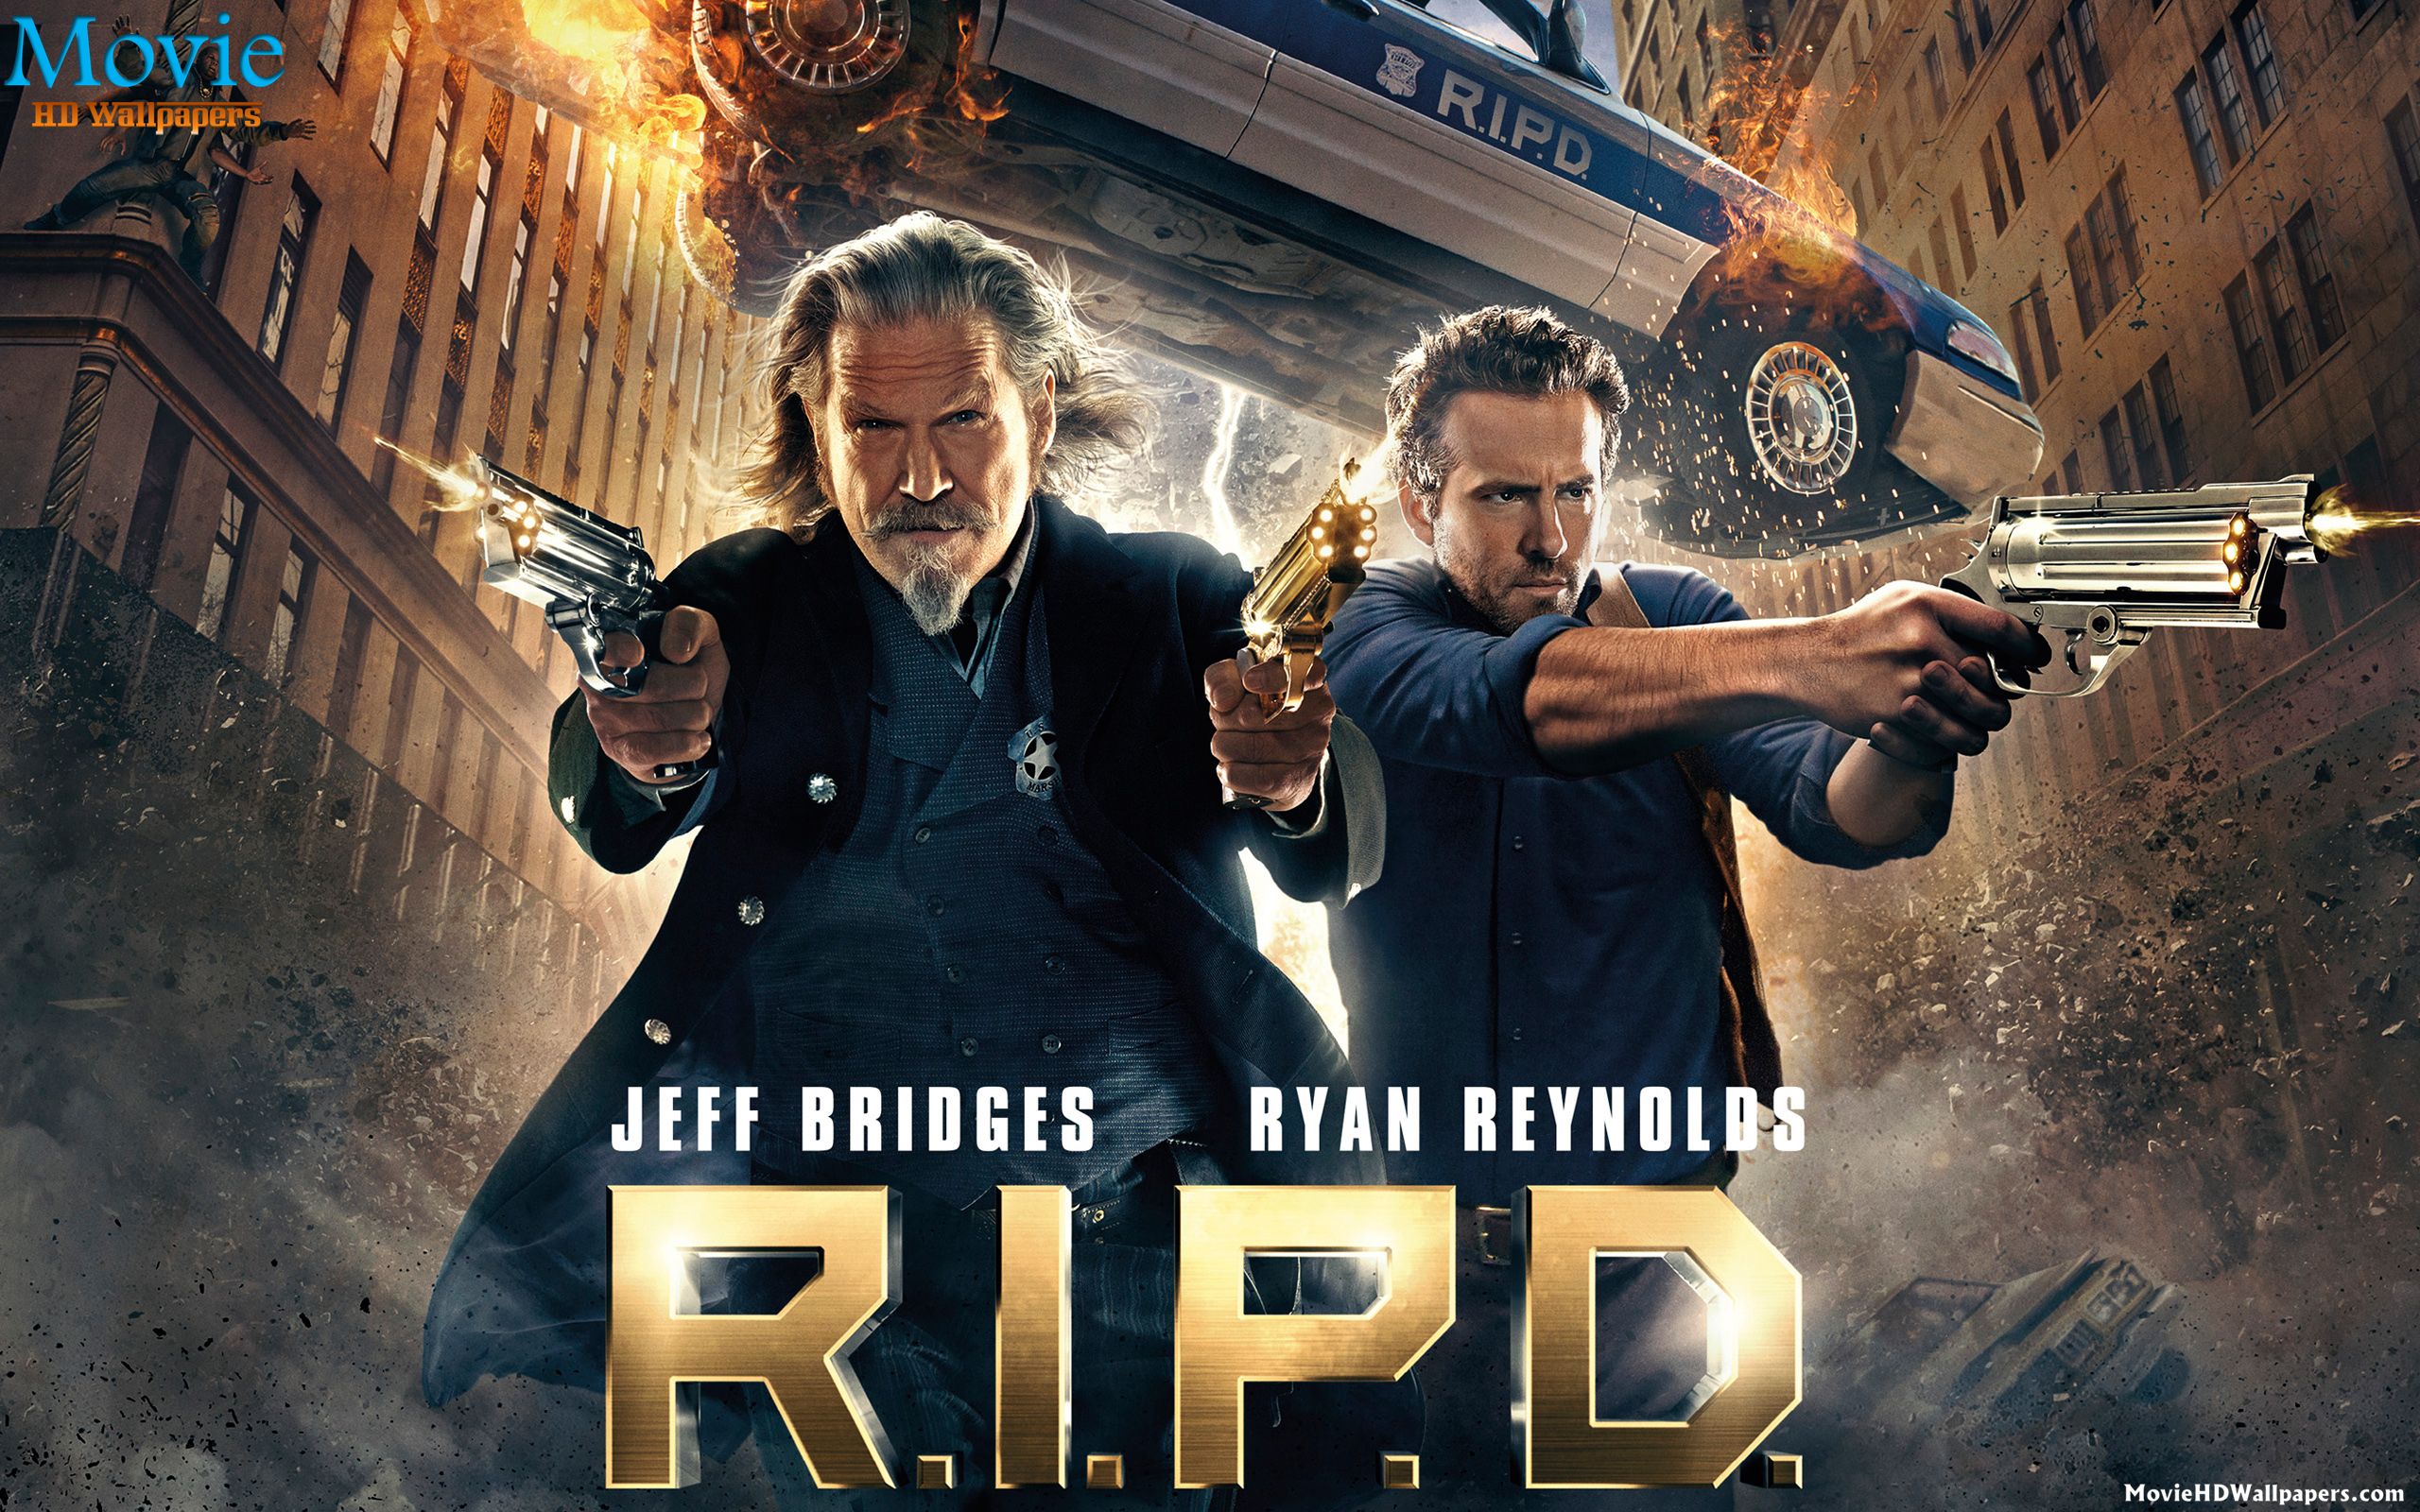 R.I.P.D: Jeff Bridges Killed, The Rest Was In Pieces